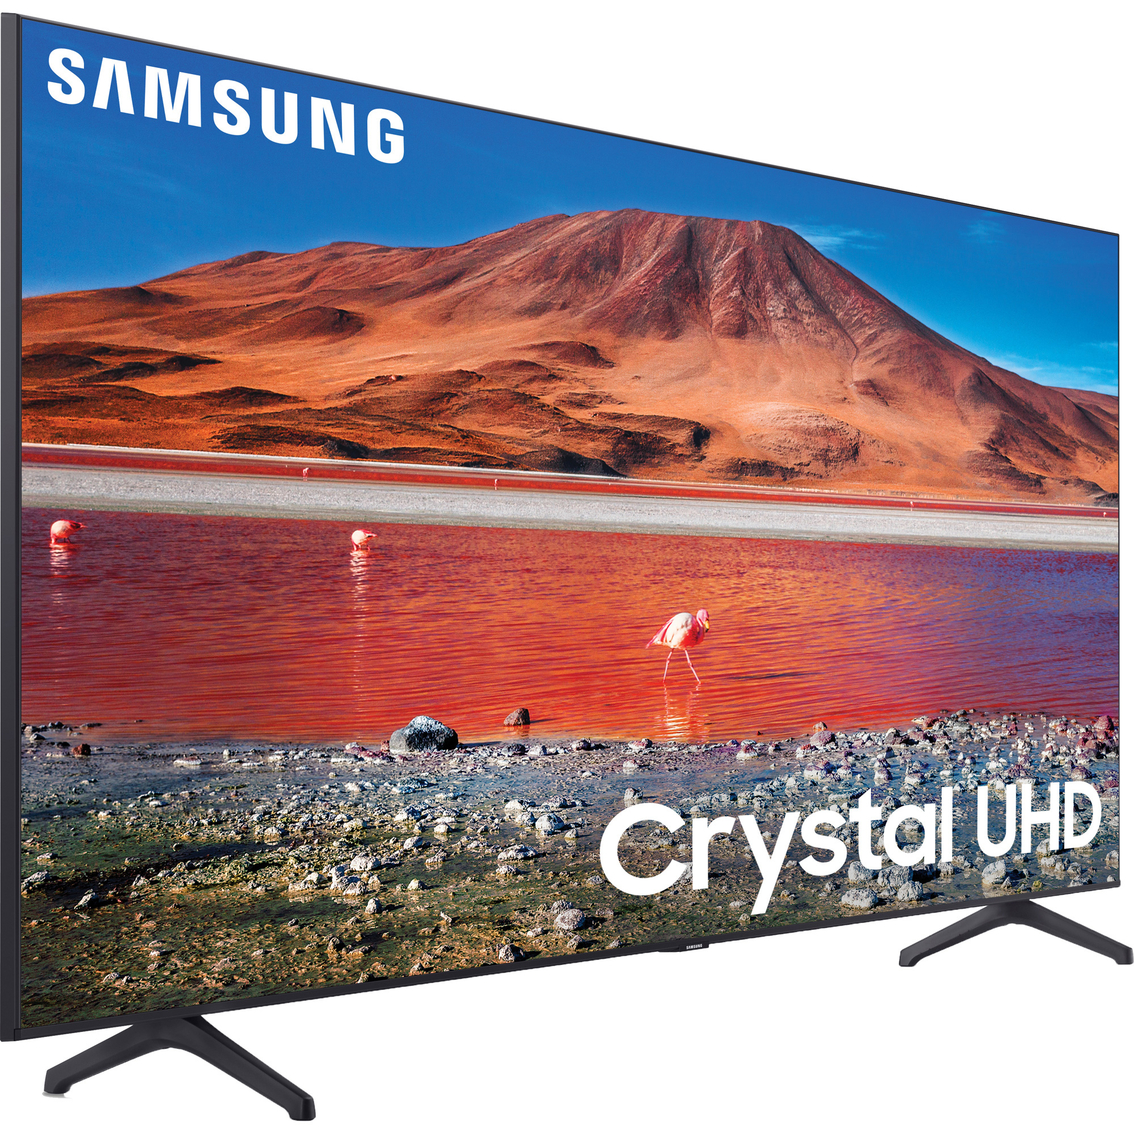 Samsung 58 in. Class TU7000 Crystal UHD 4K HDR Smart TV UN58TU7000FXZA - Image 2 of 7